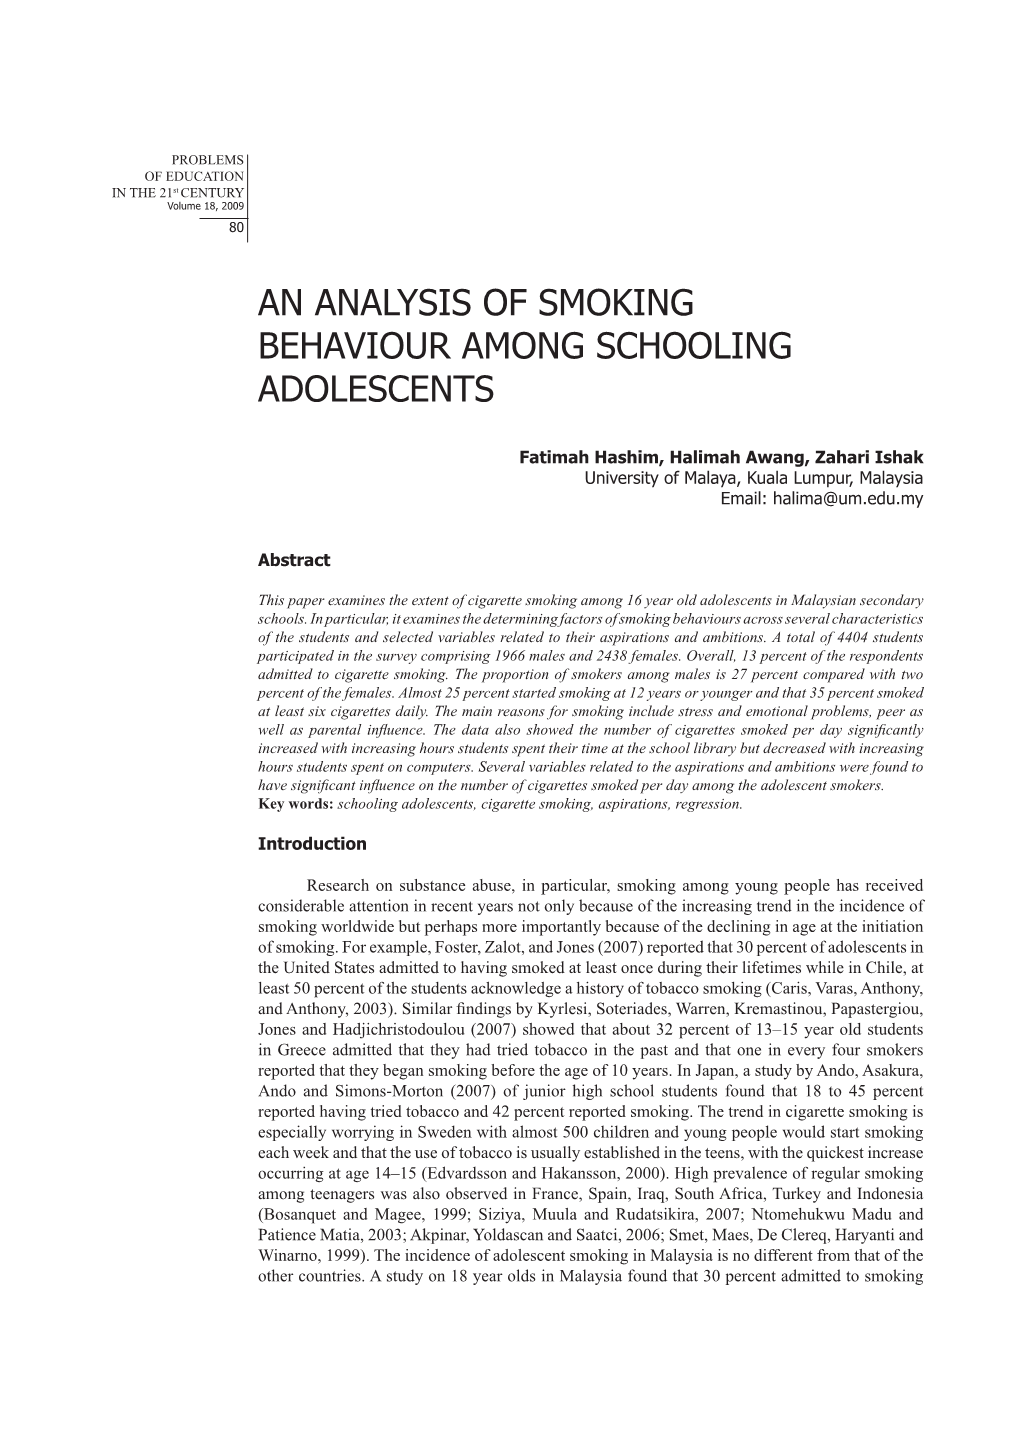 An Analysis of Smoking Behaviour Among Schooling Adolescents